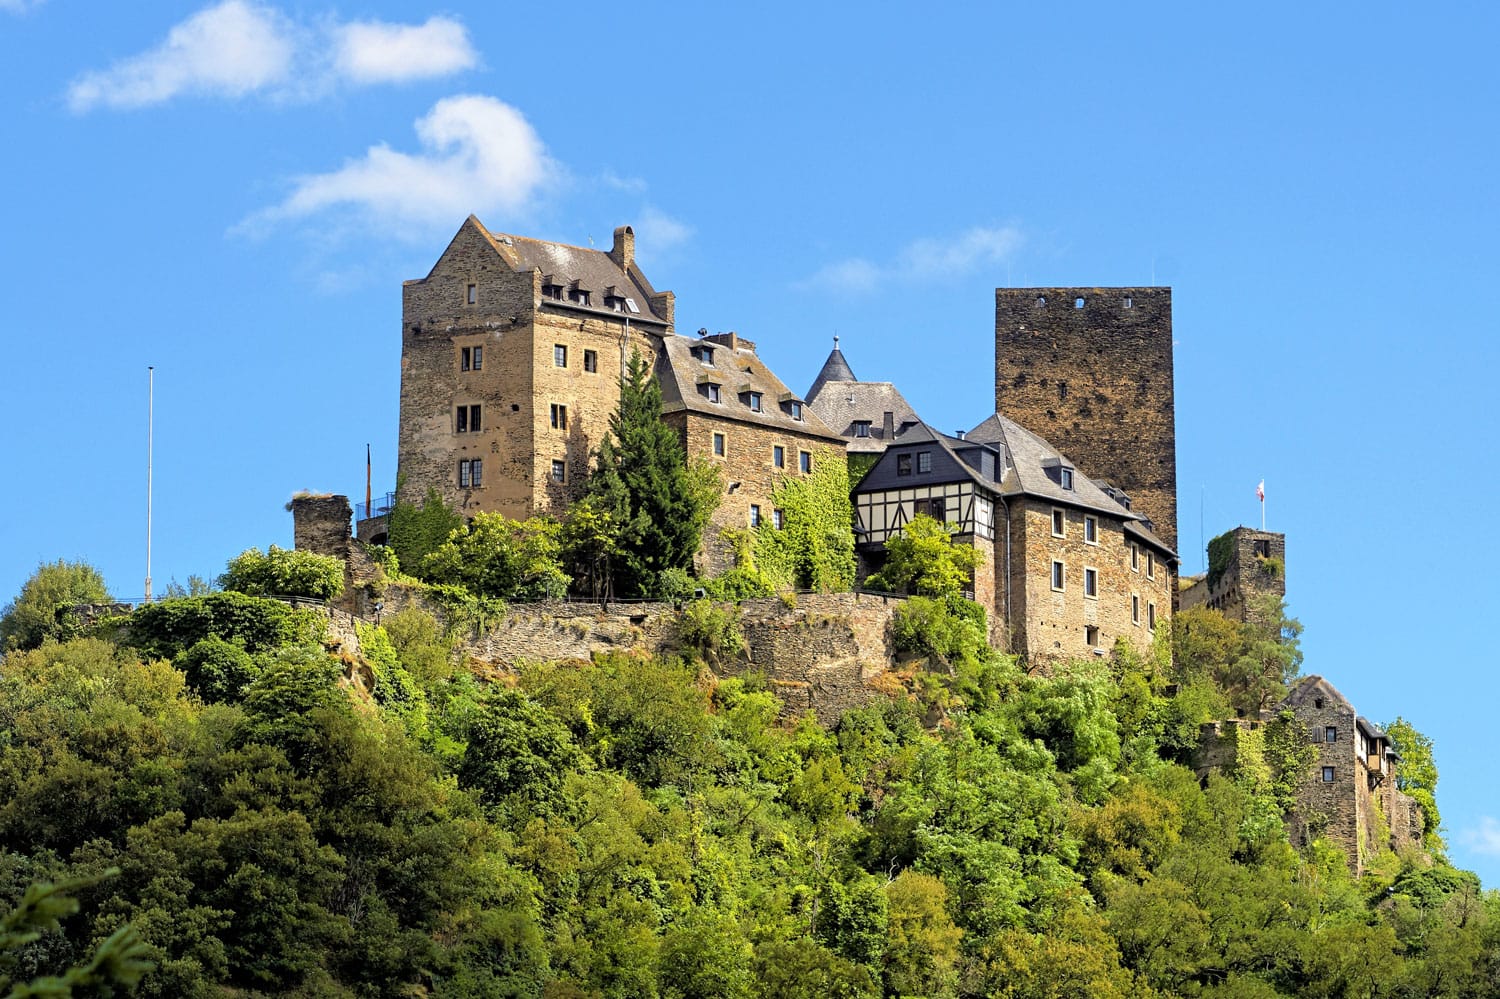 Castle Schoenburg Oberwesel, Germany